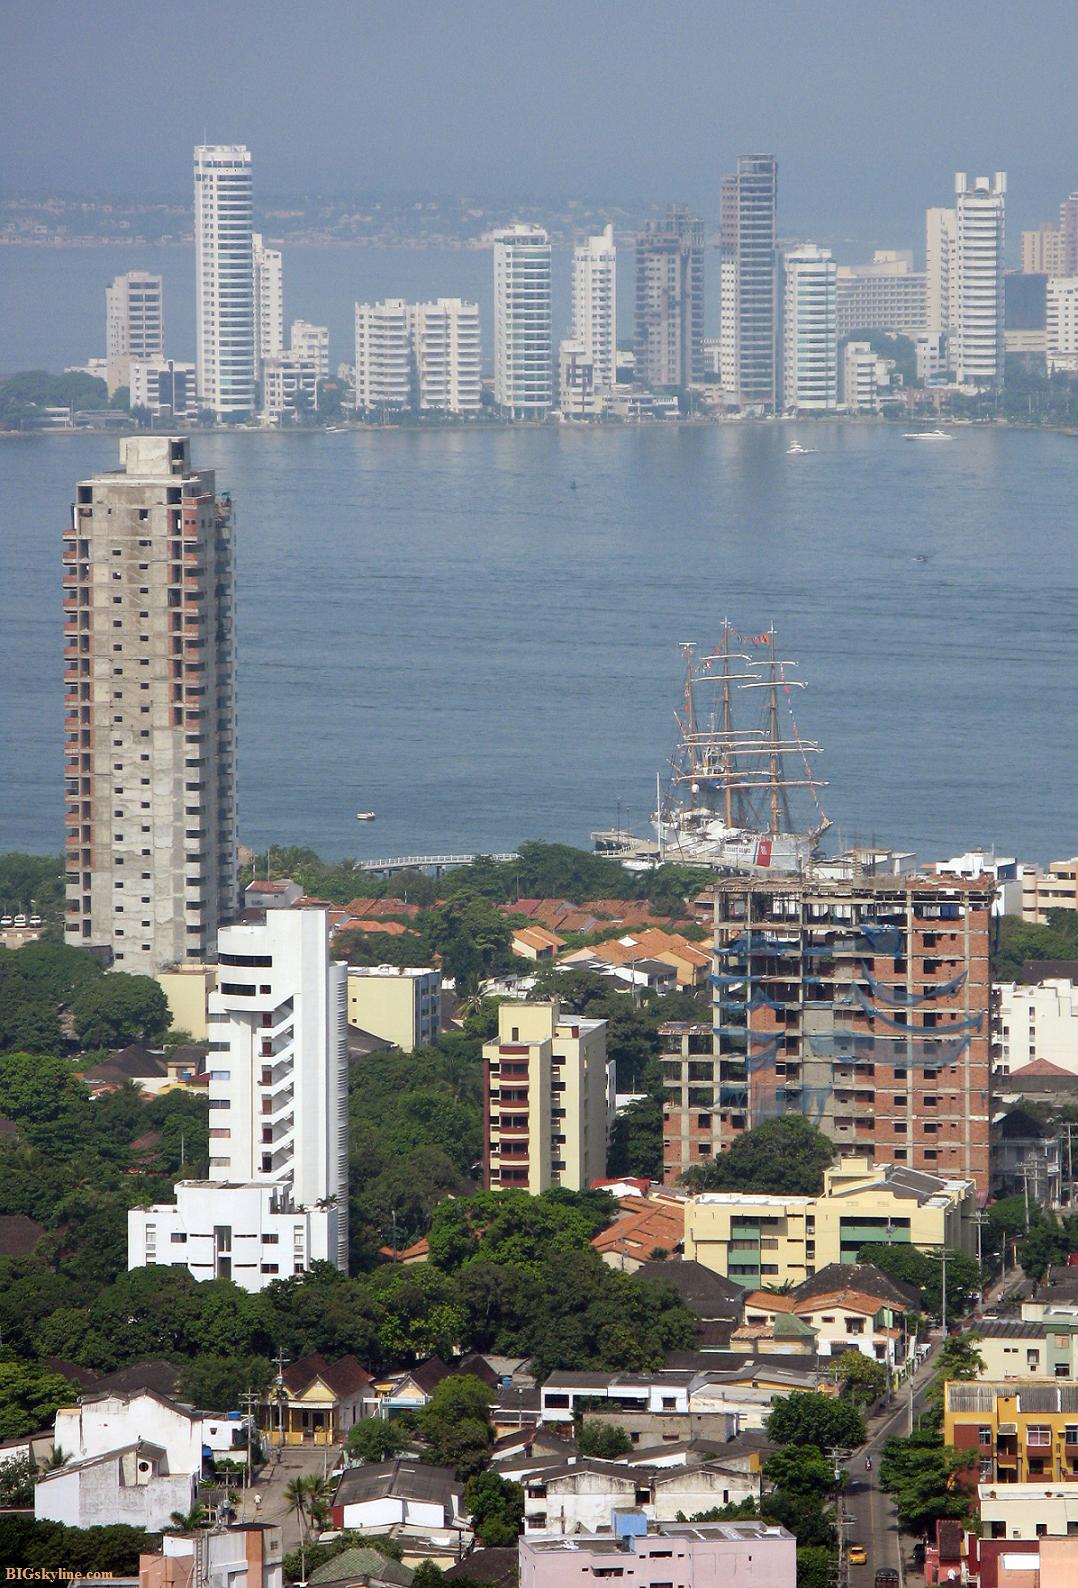 Cartagena skyline in Colombia